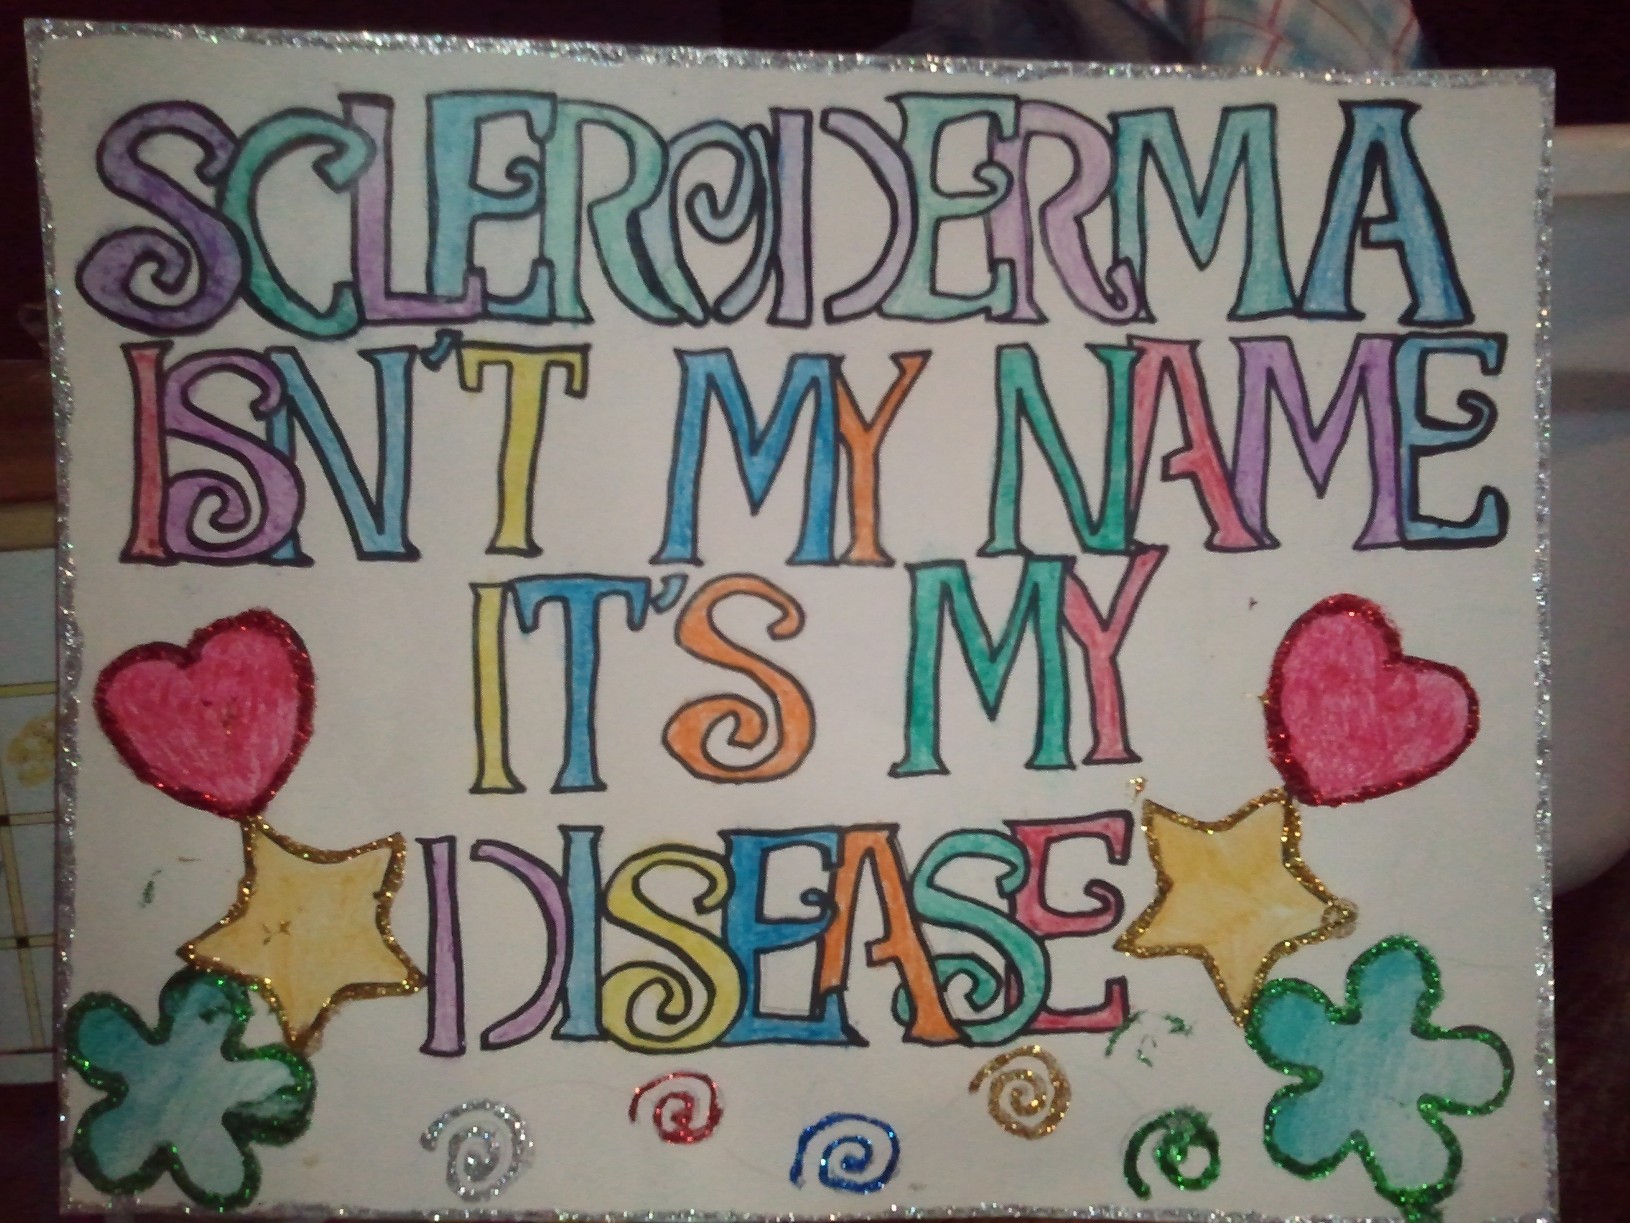 Scleroderma isn't my name